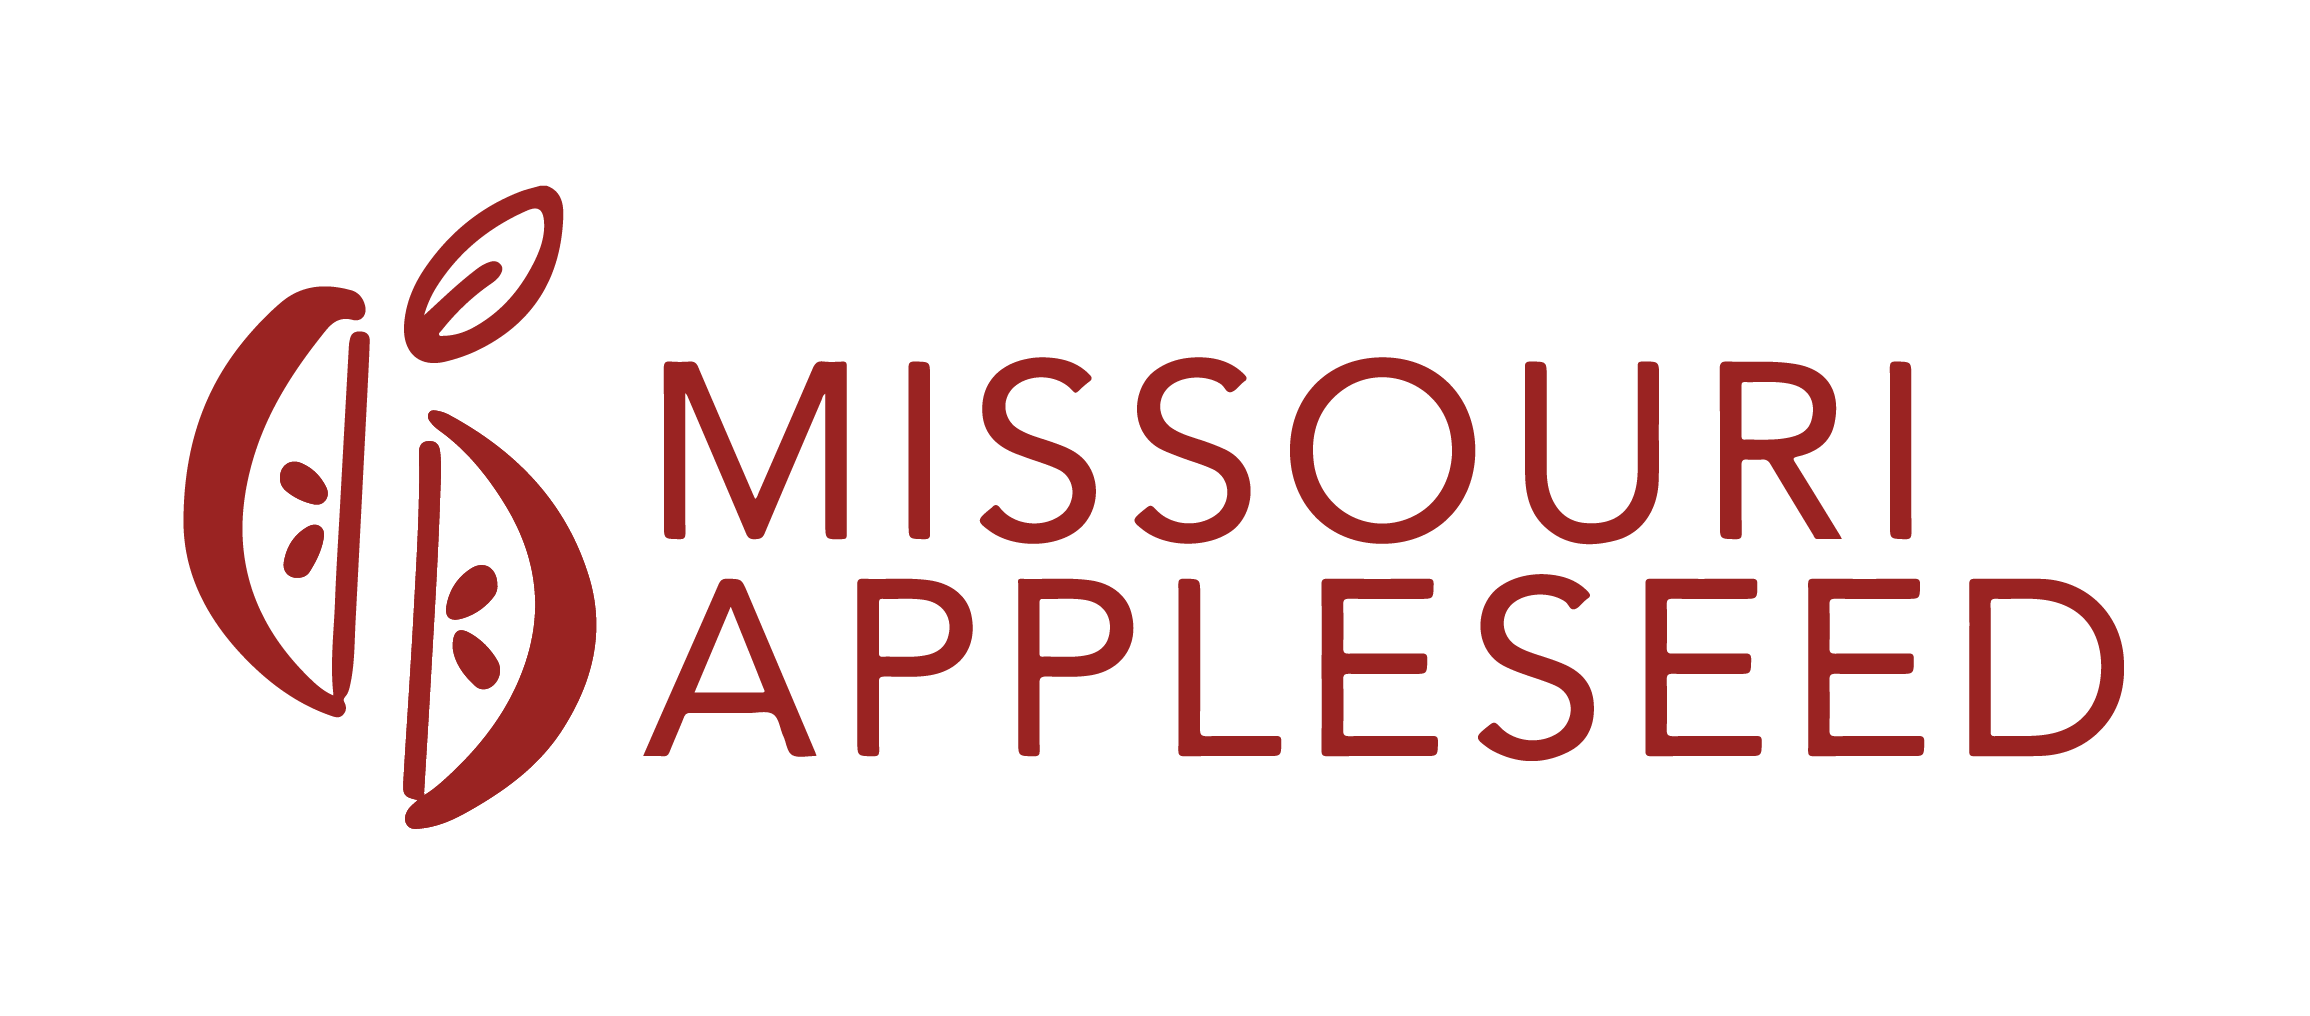 Missouri Appleseed logo red